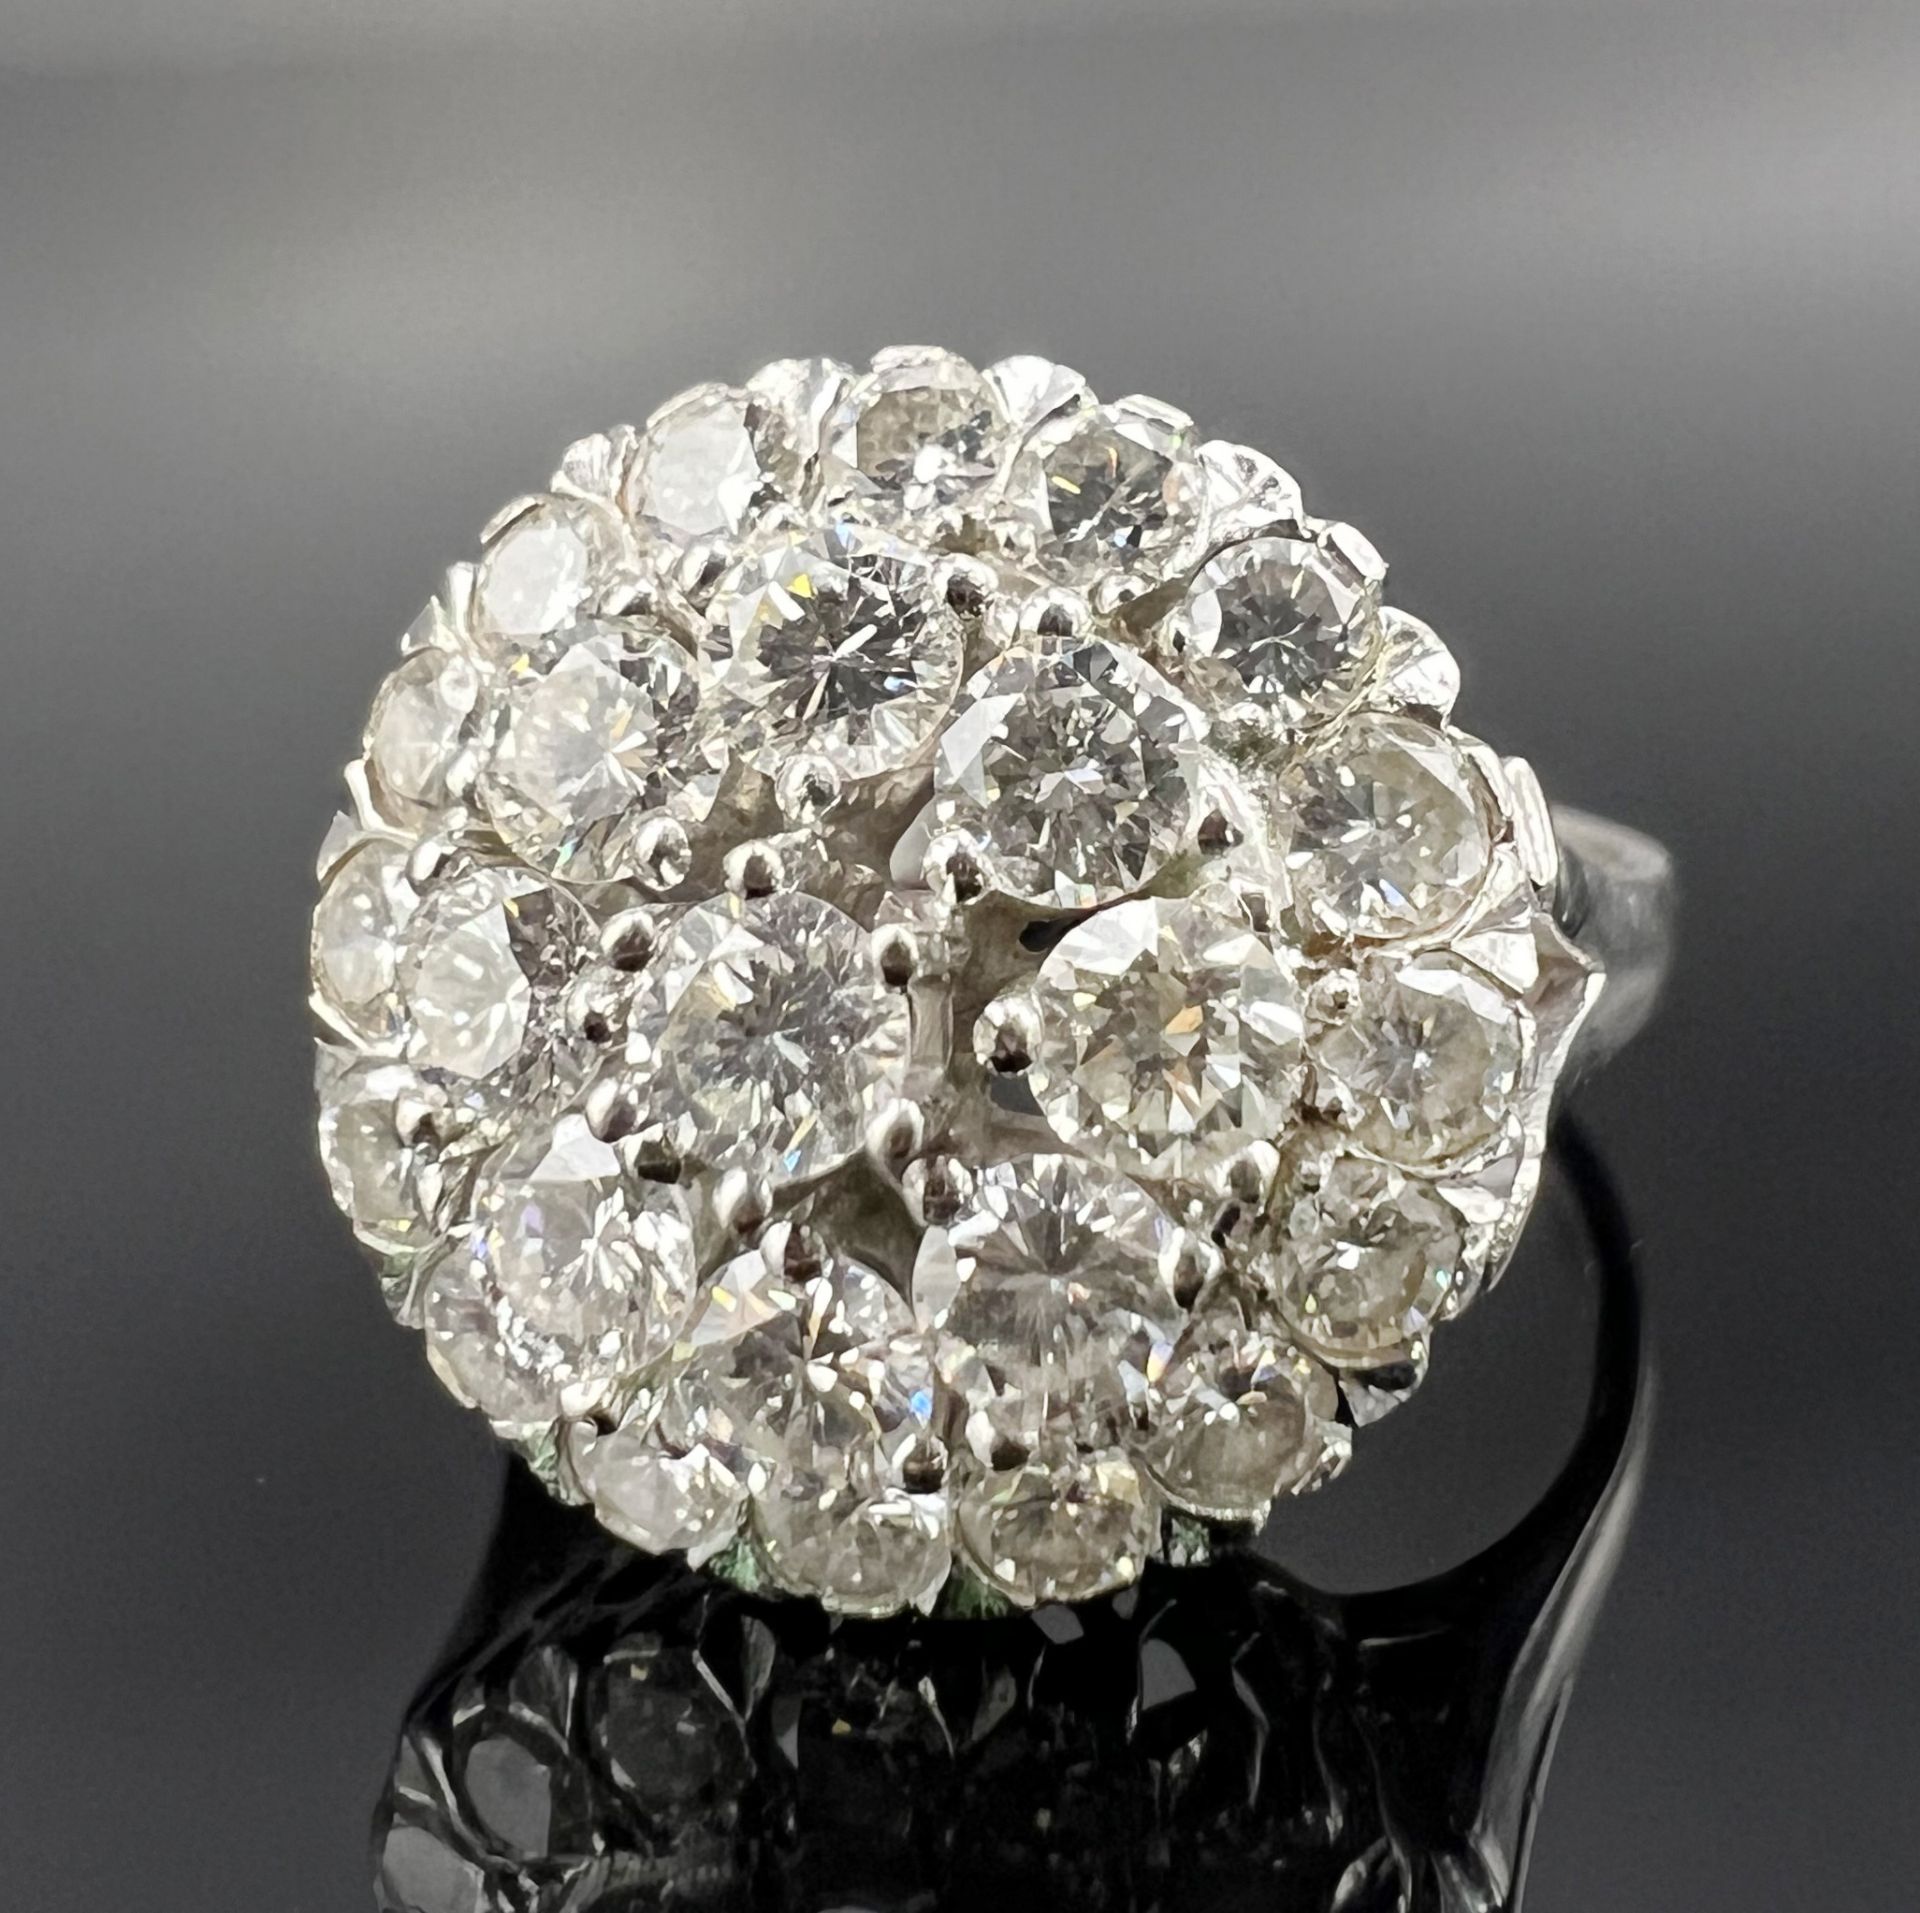 Ladies' ring 585 white gold with 25 diamonds.